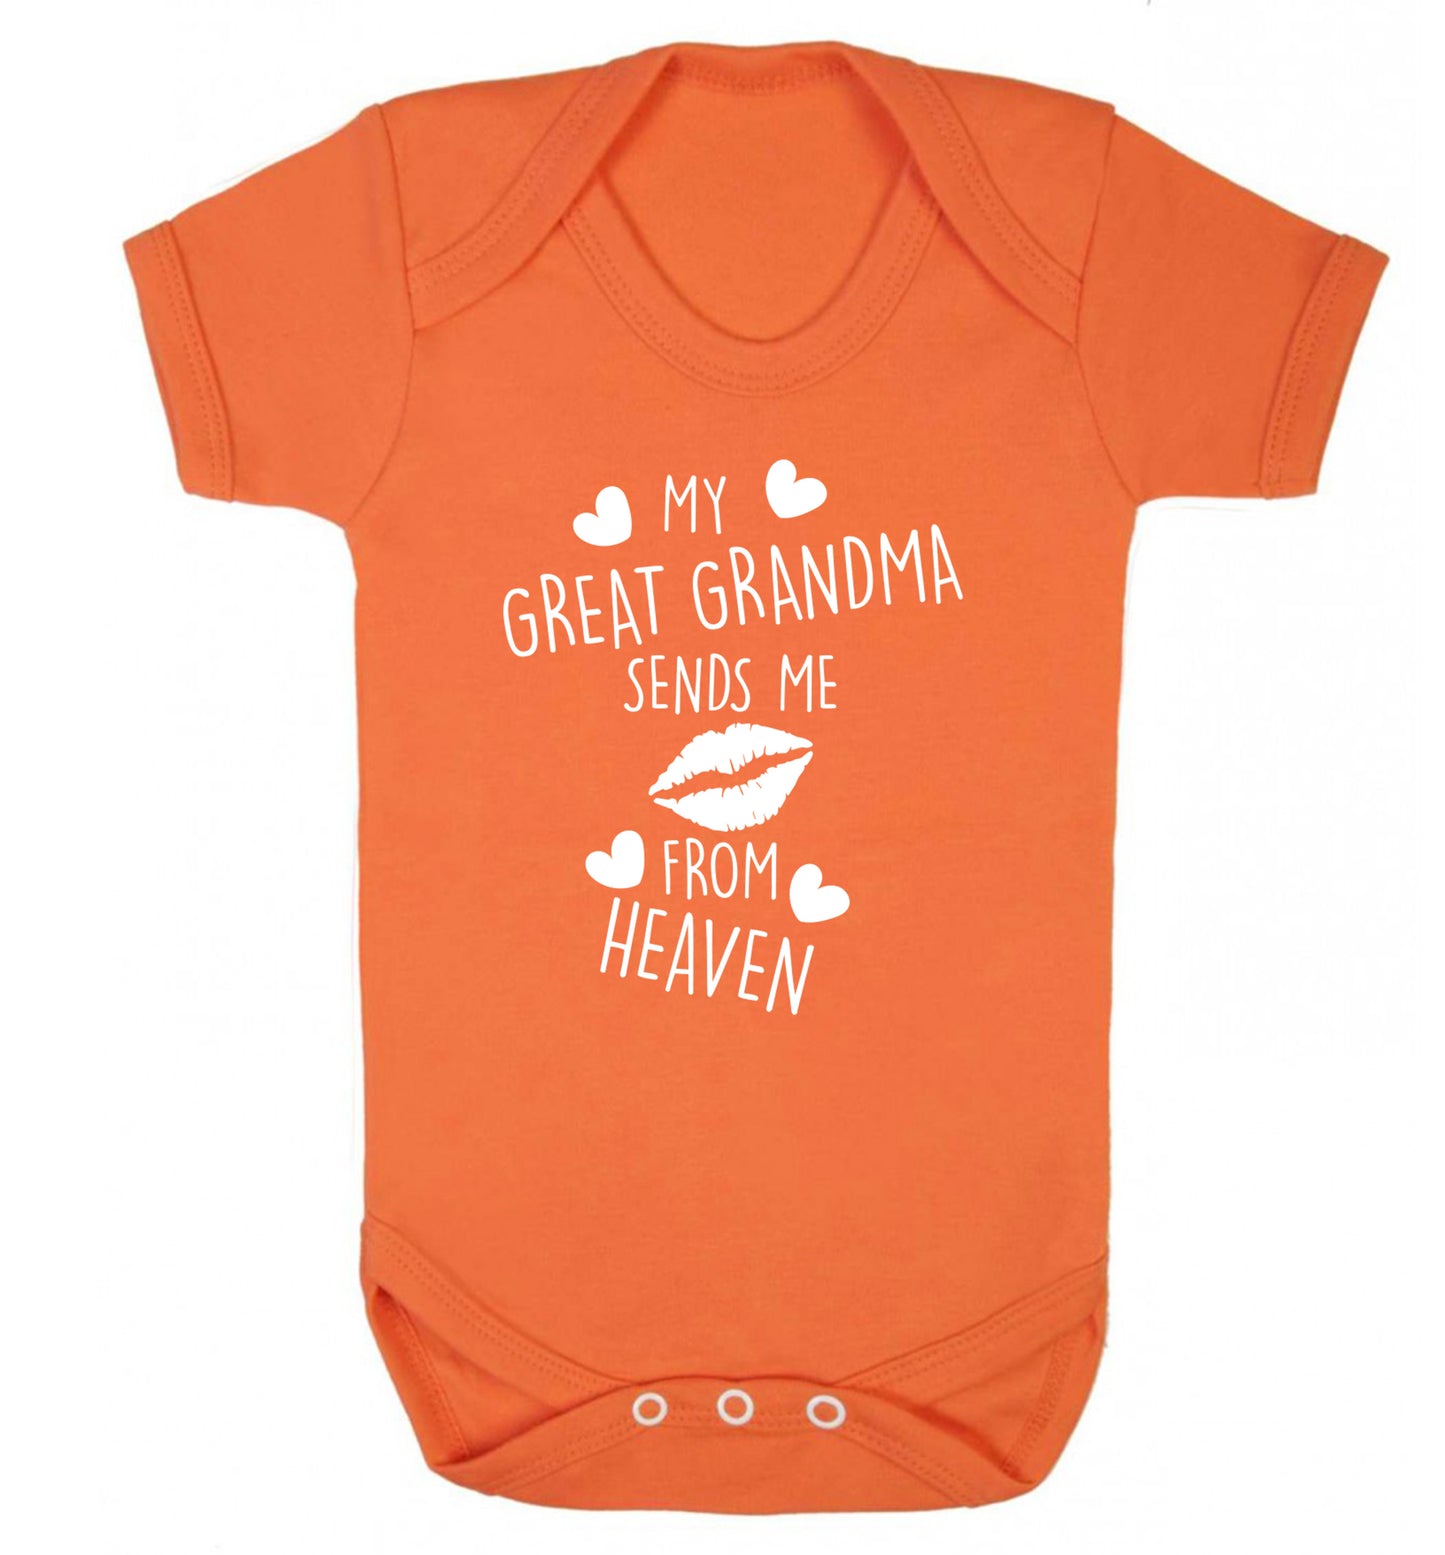 My great grandma sends me kisses from heaven Baby Vest orange 18-24 months